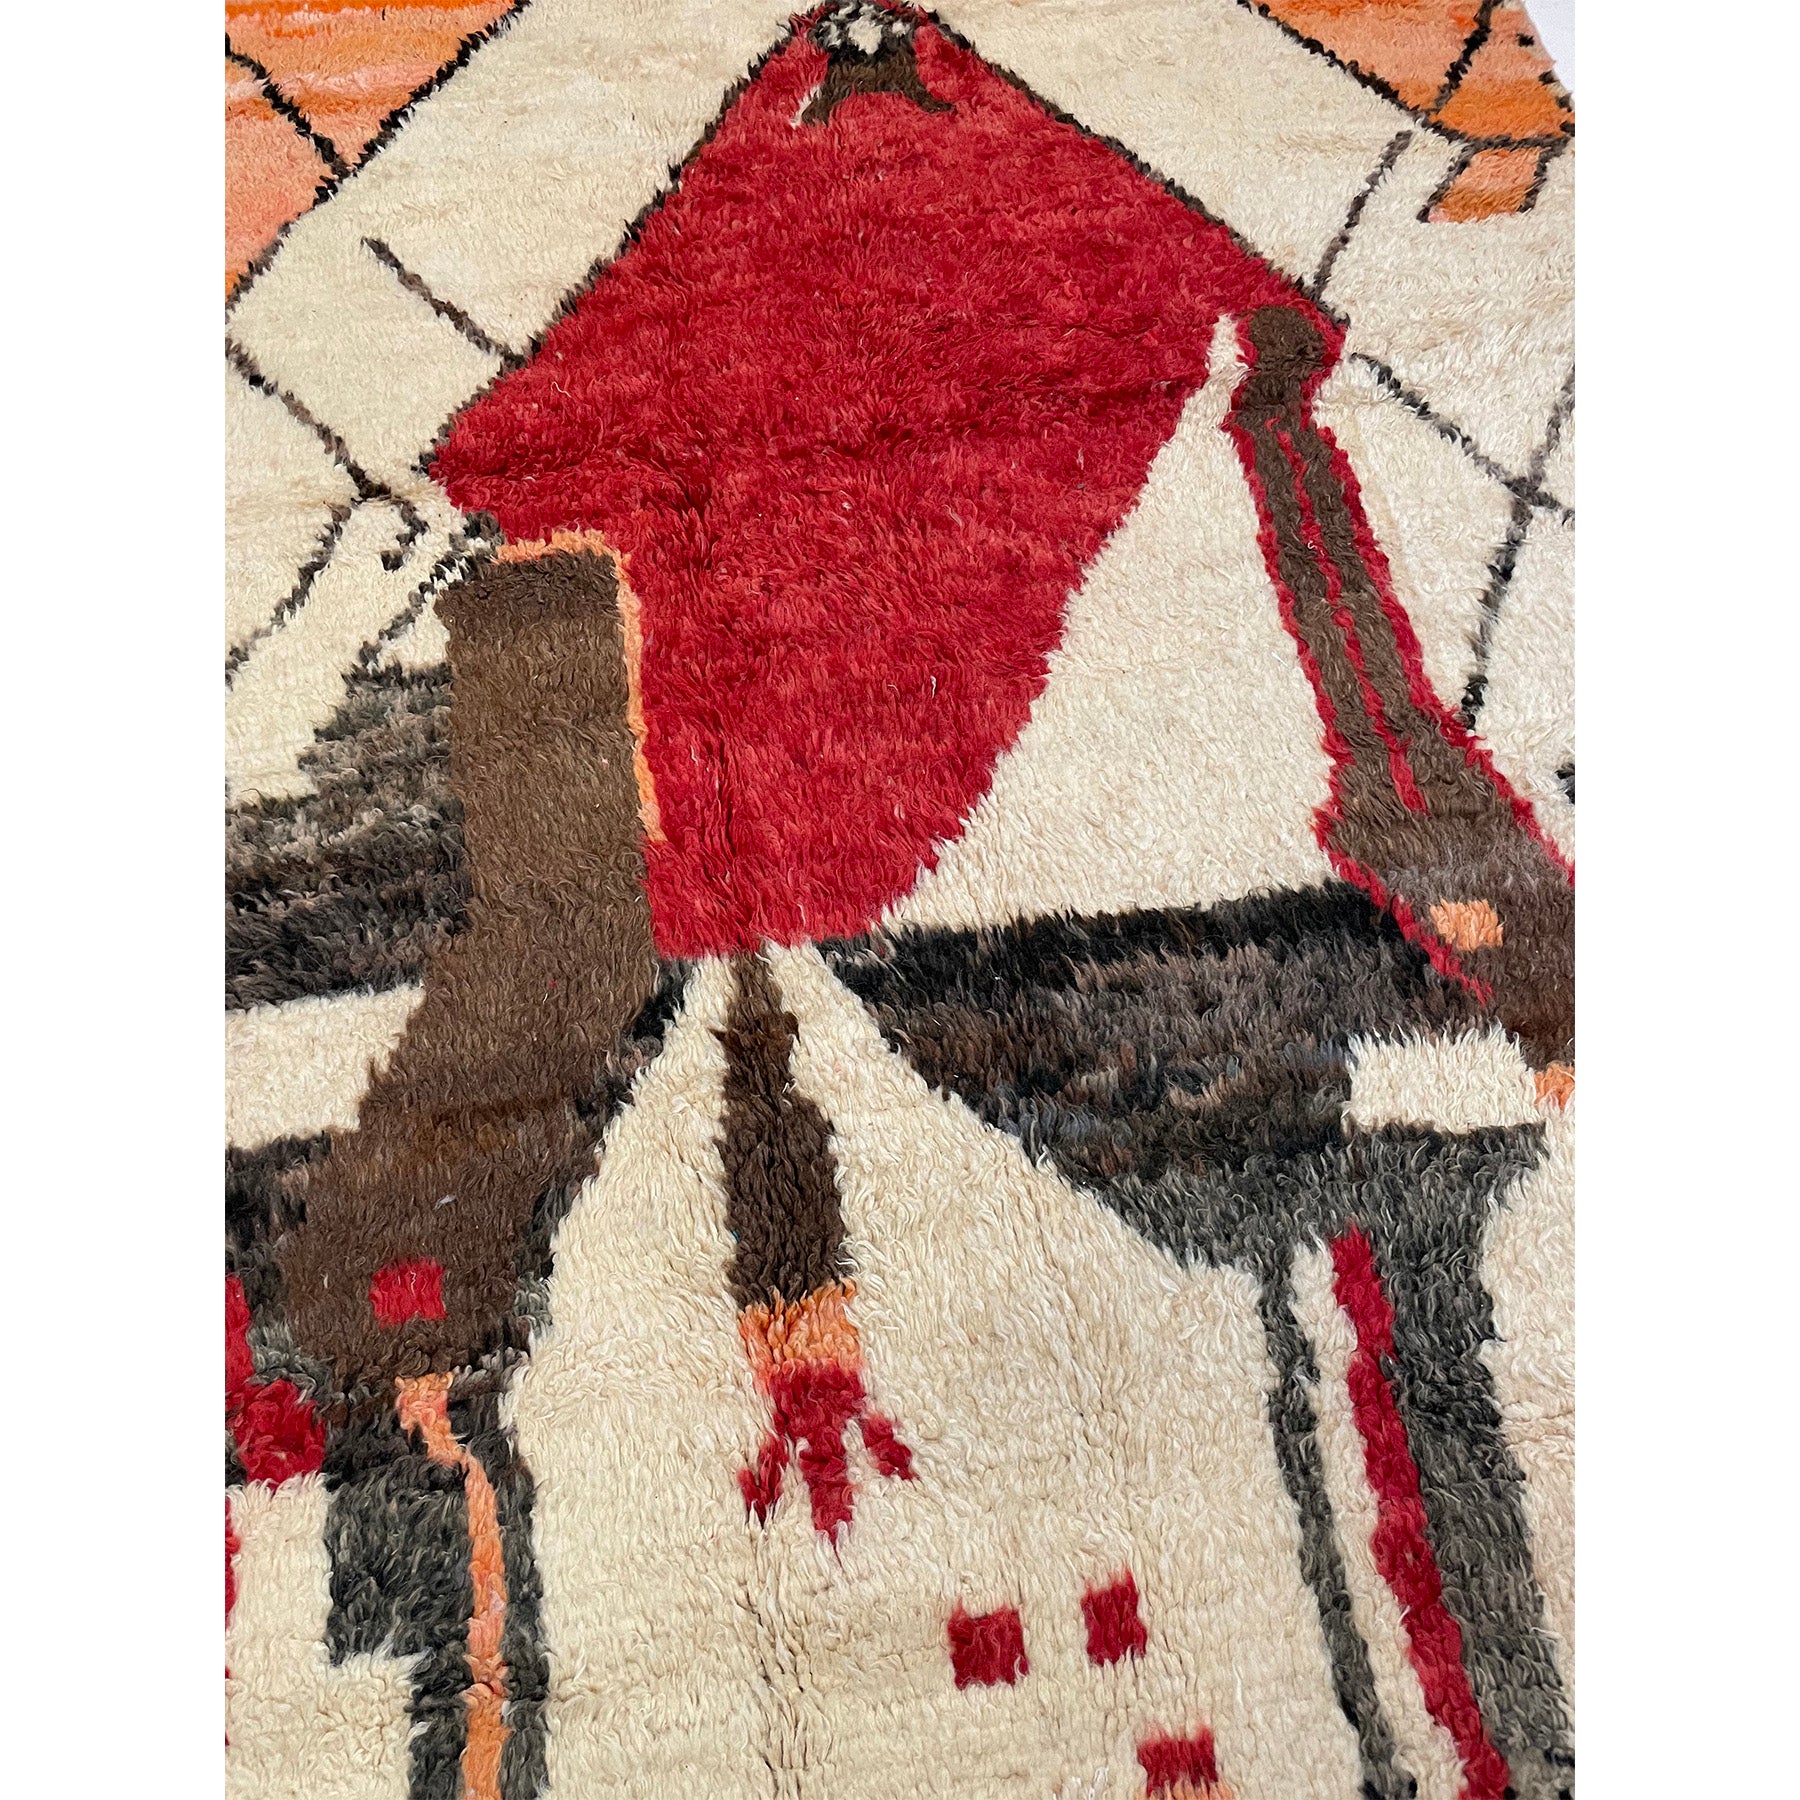 Contemporary red and orange Moroccan living room rug - Kantara | Moroccan Rugs